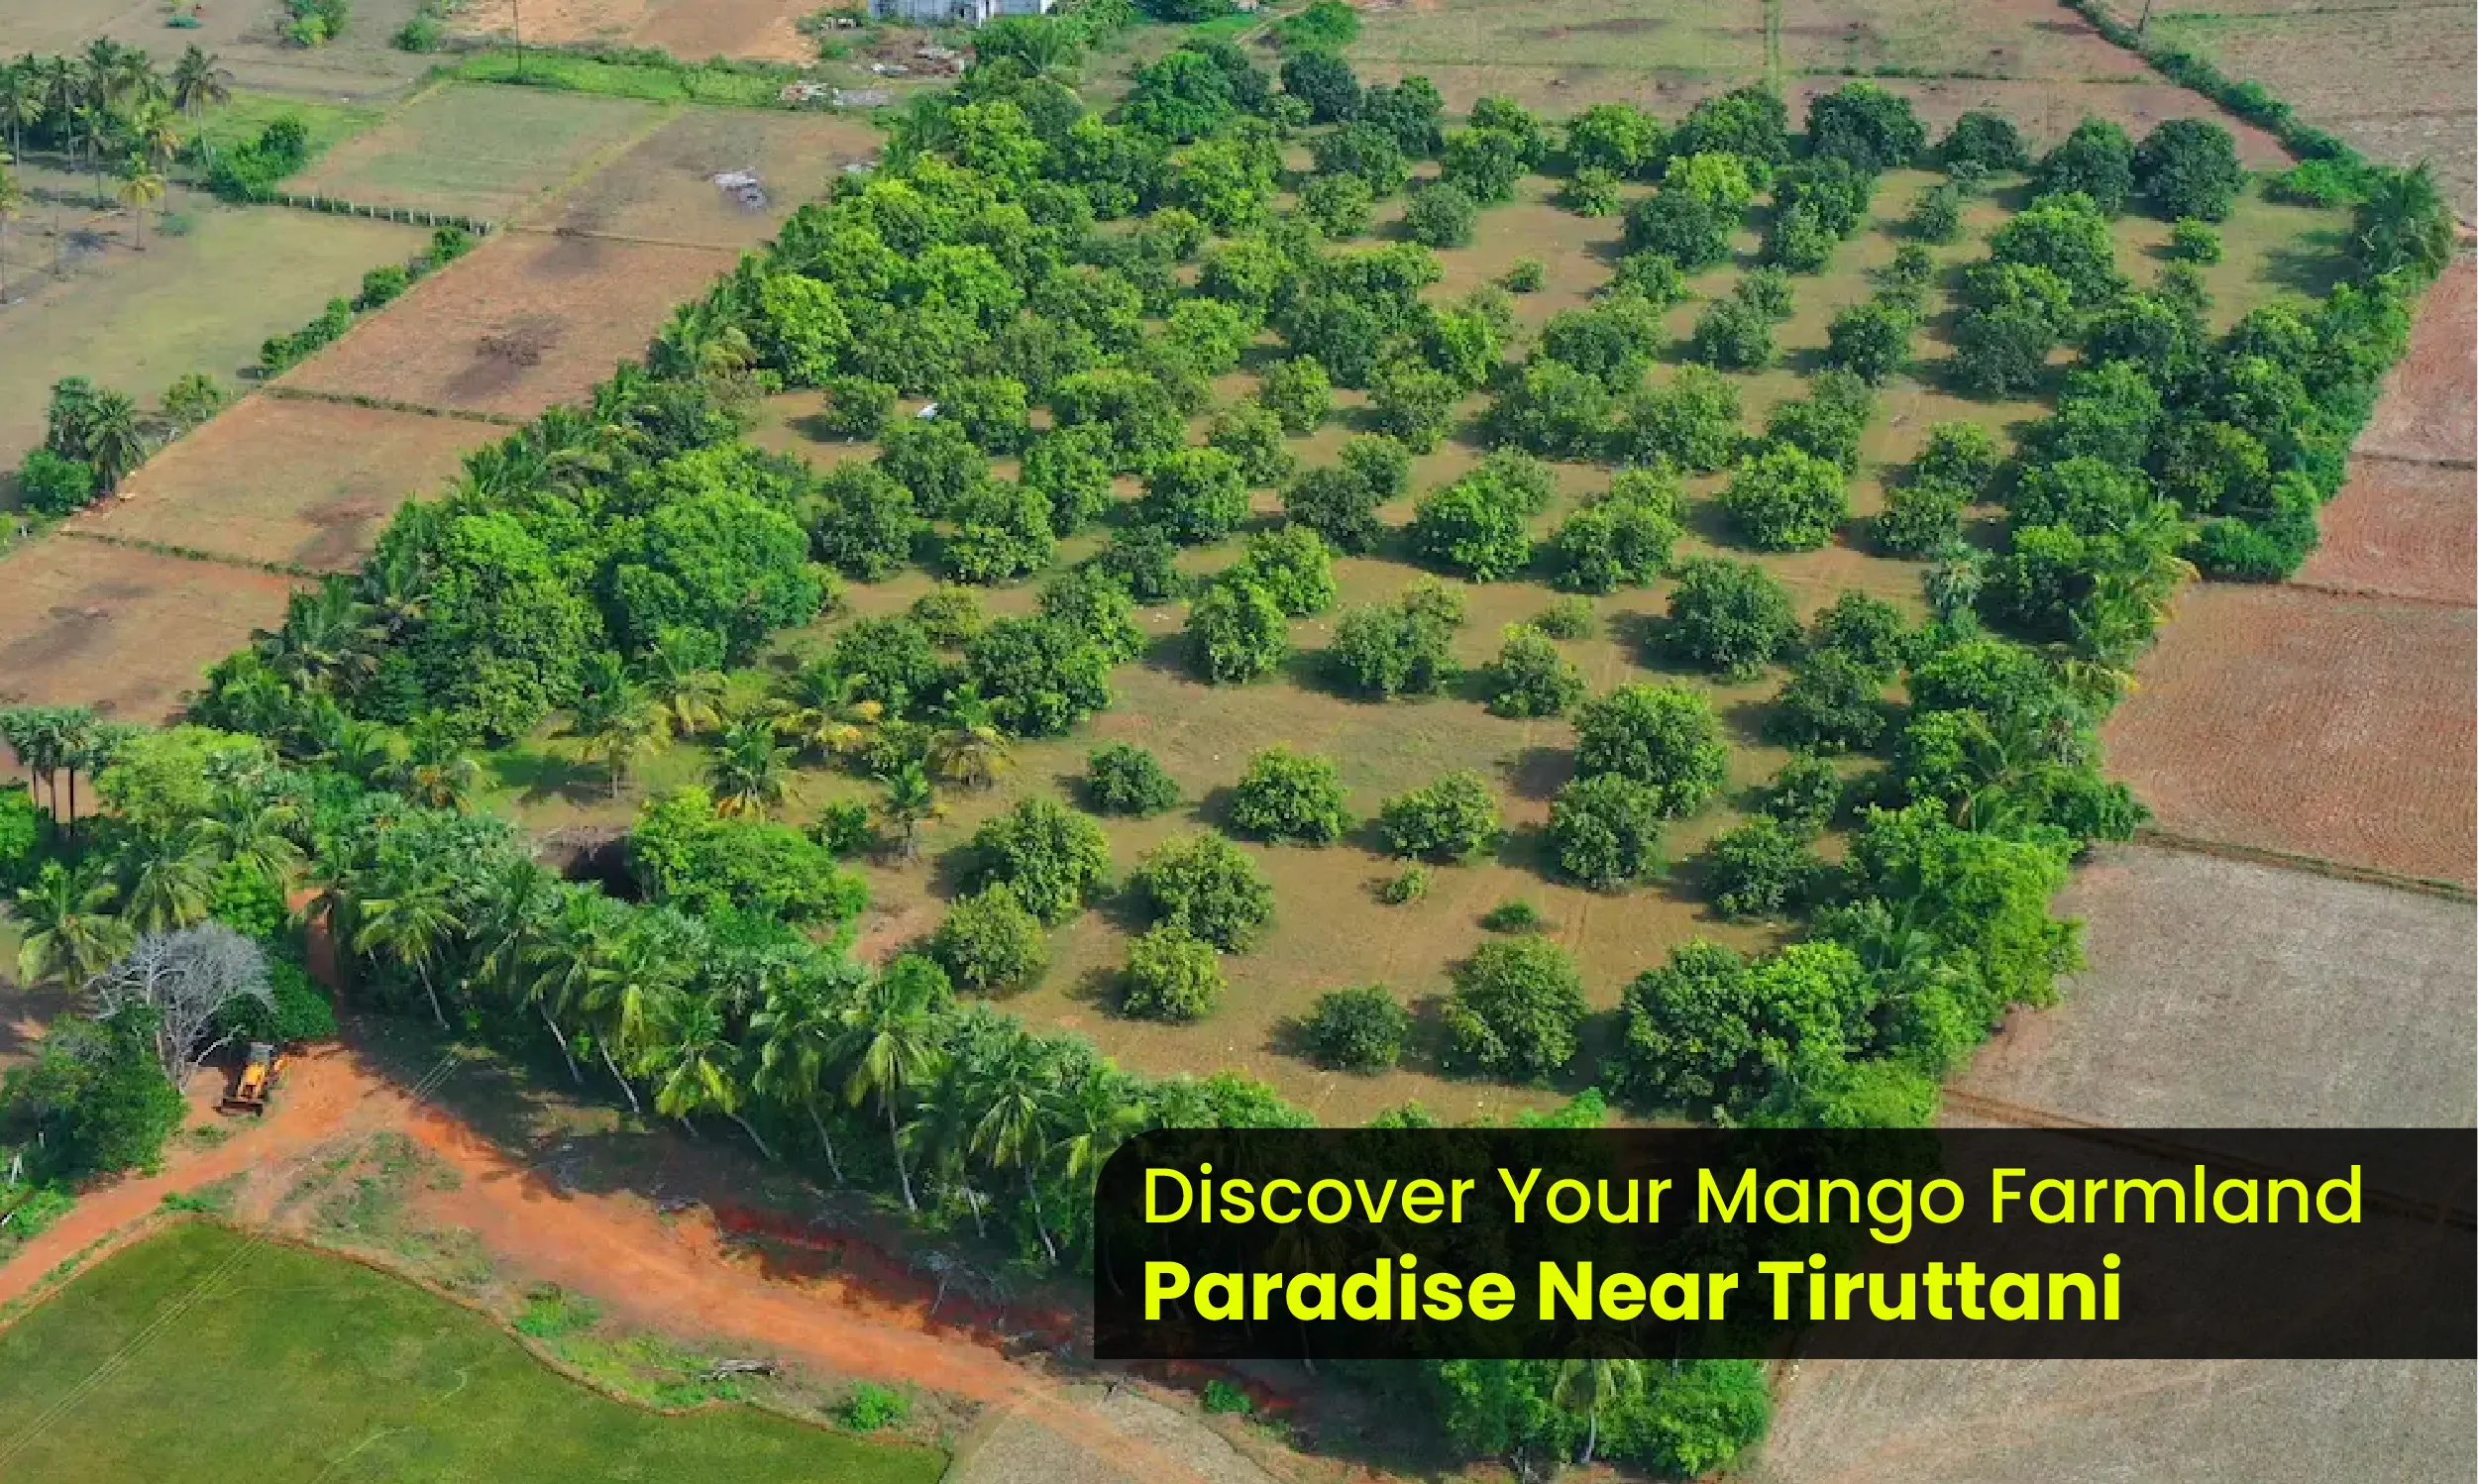 Discover Your Farmland Paradise near Tiruttani